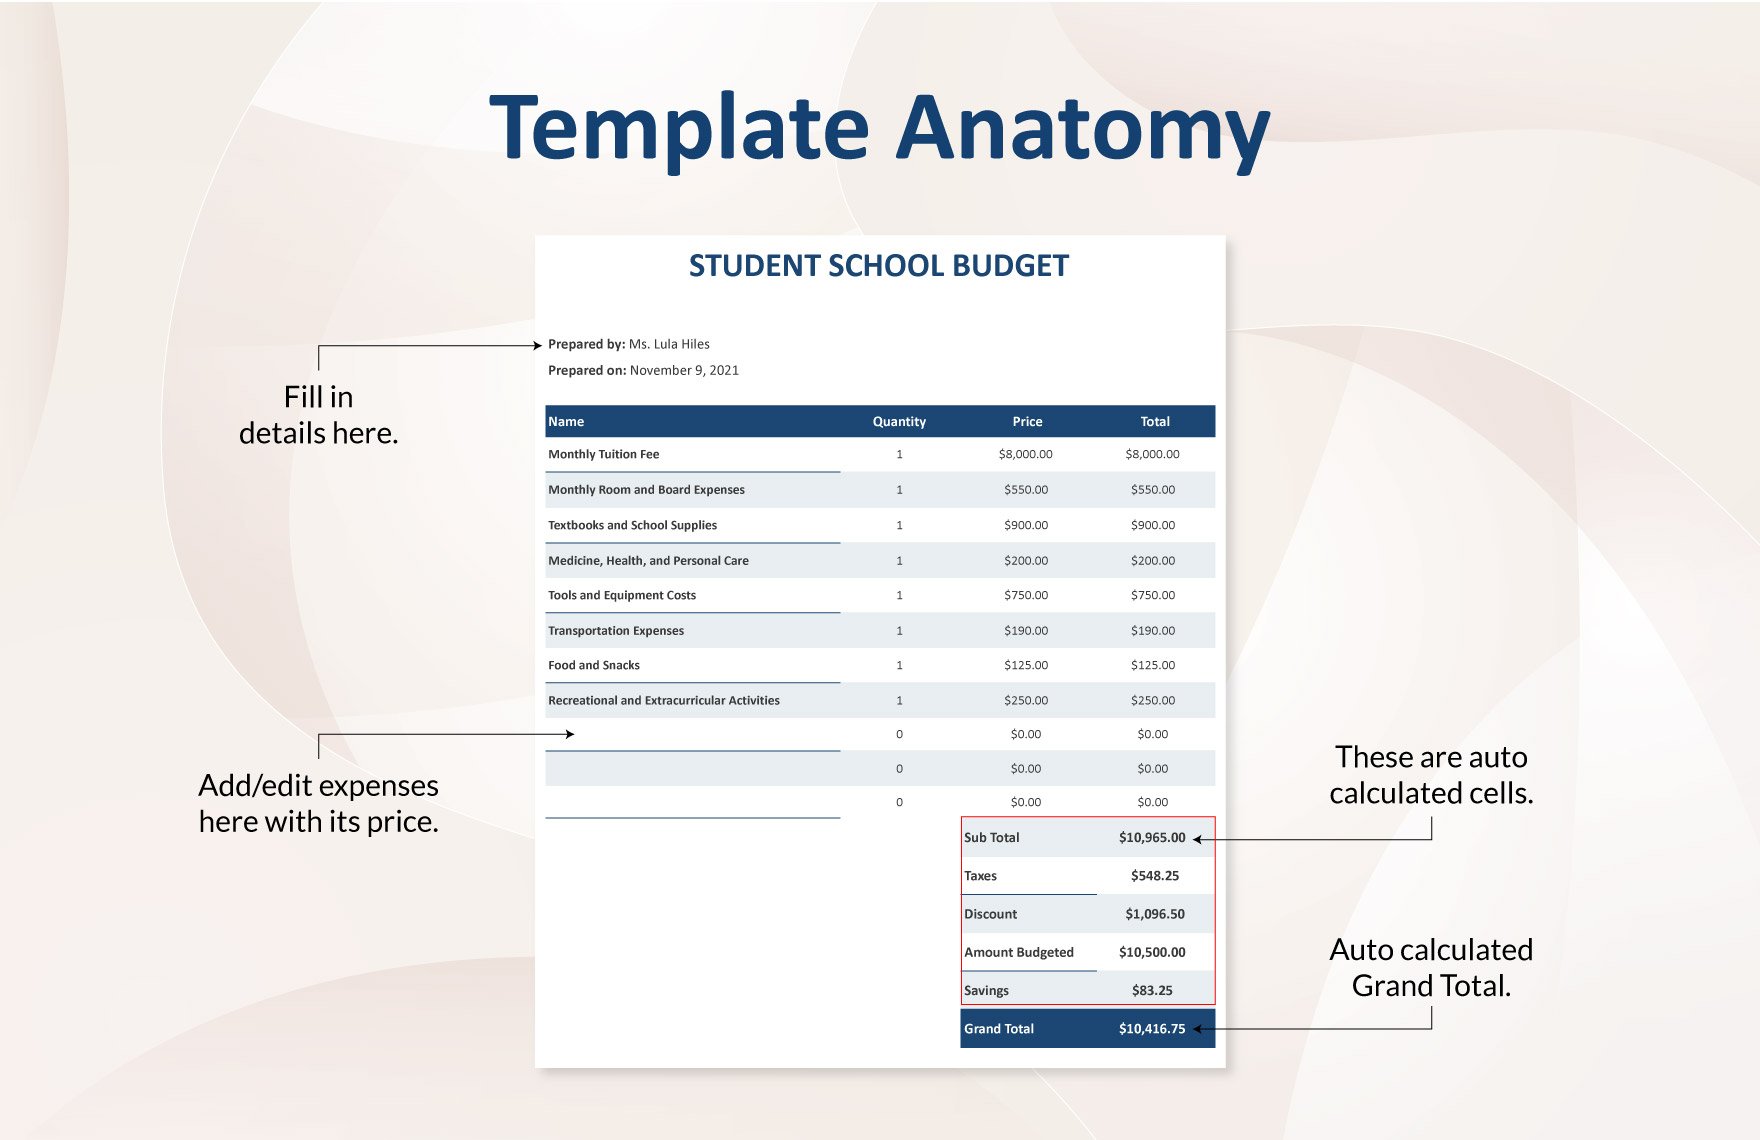 Sample School Budget Template